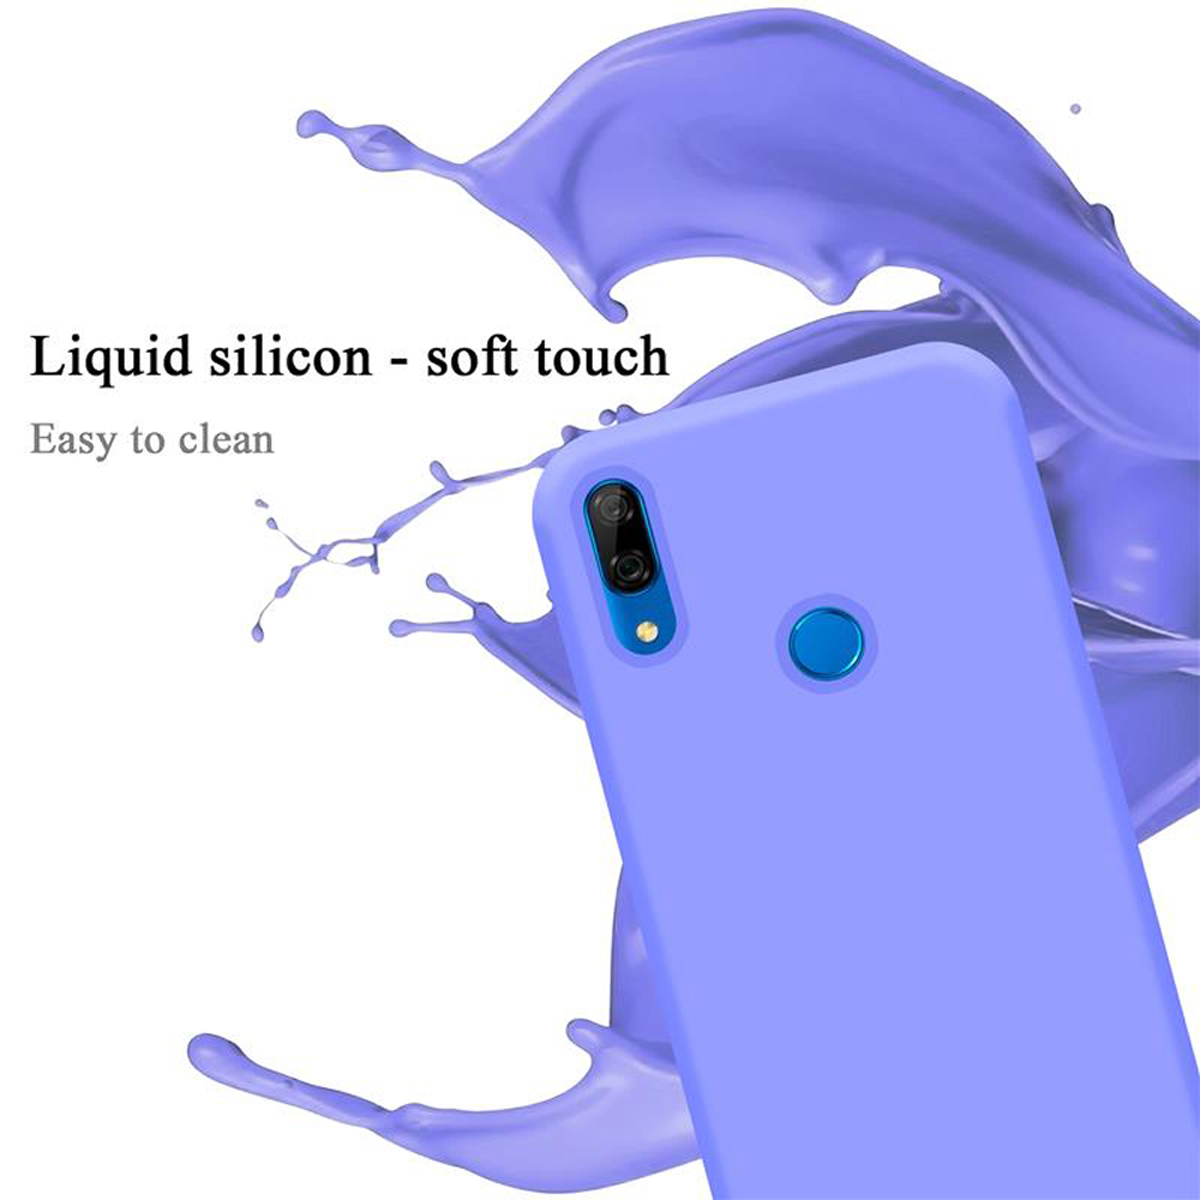 CADORABO Hülle im Liquid Silicone LILA HELL SMART P / / 2019 Huawei, Enjoy Backcover, Case 10 Style, LIQUID PRIME Y9 Z PLUS